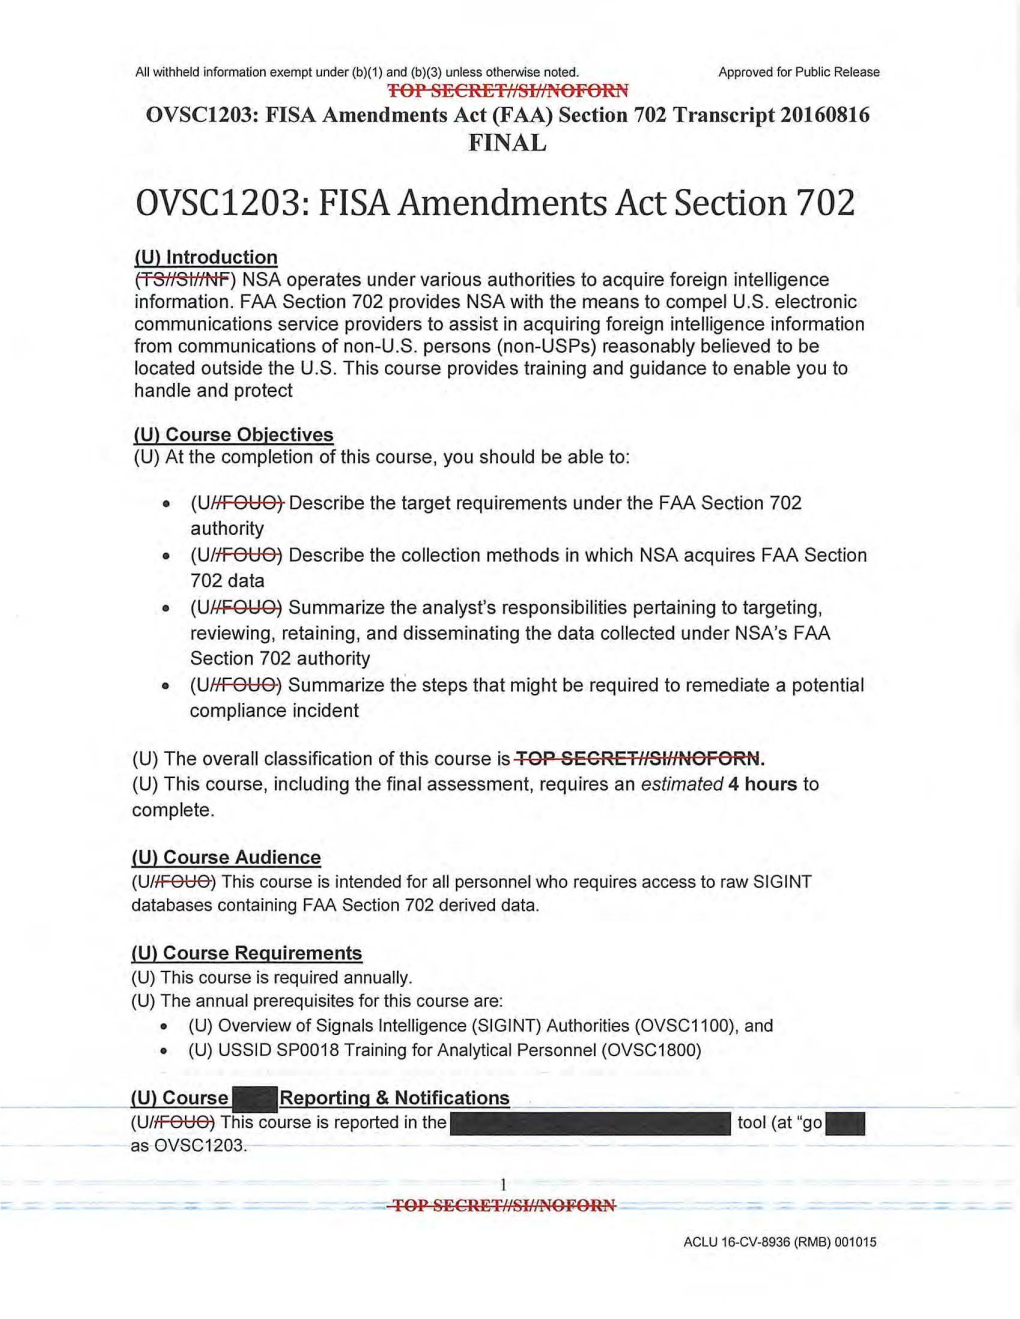 OVSC1203: Fisaamendments Act Section 702